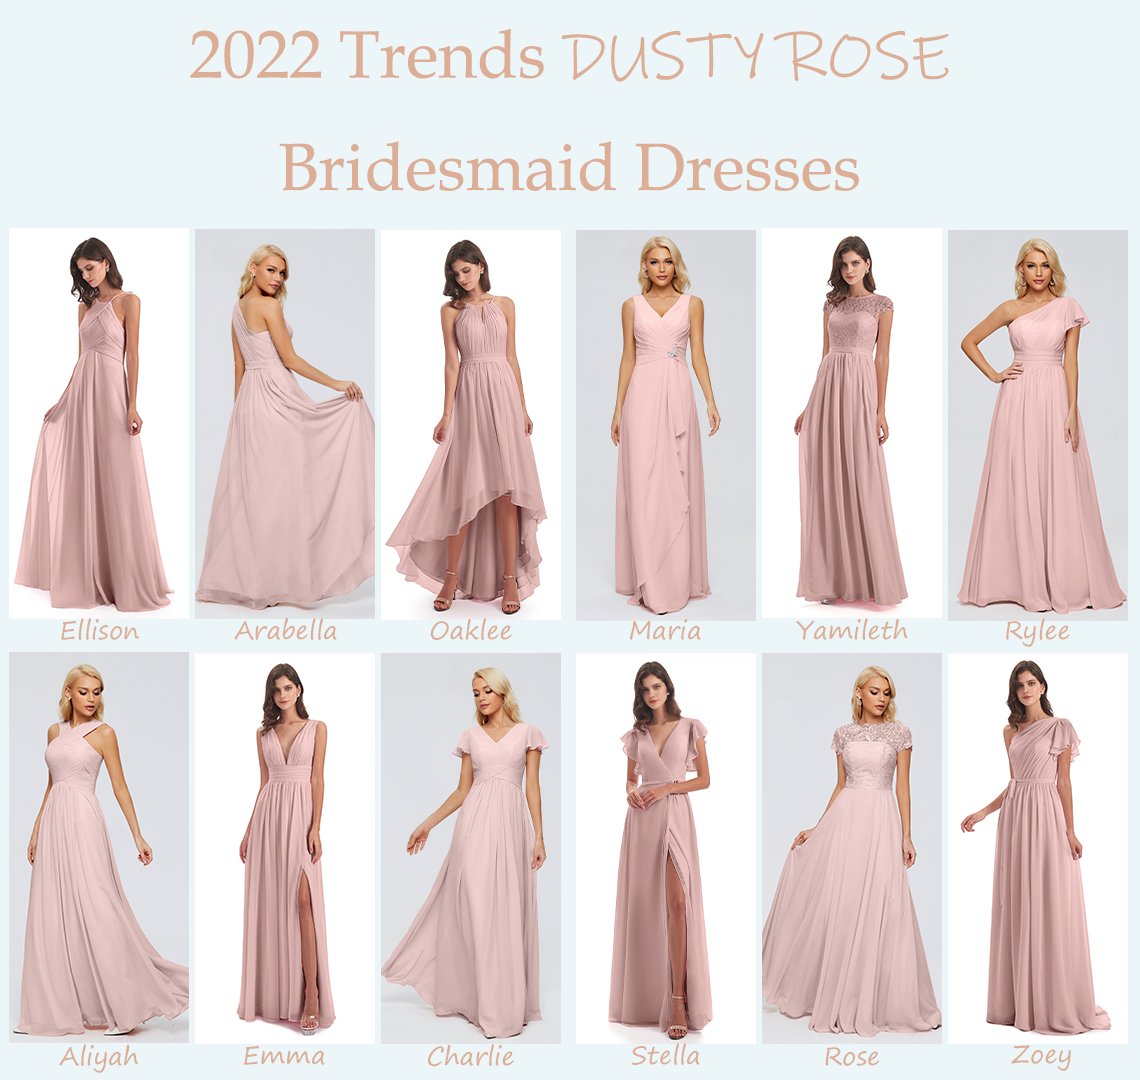 Dusty Rose Lace Bridesmaid Dresses